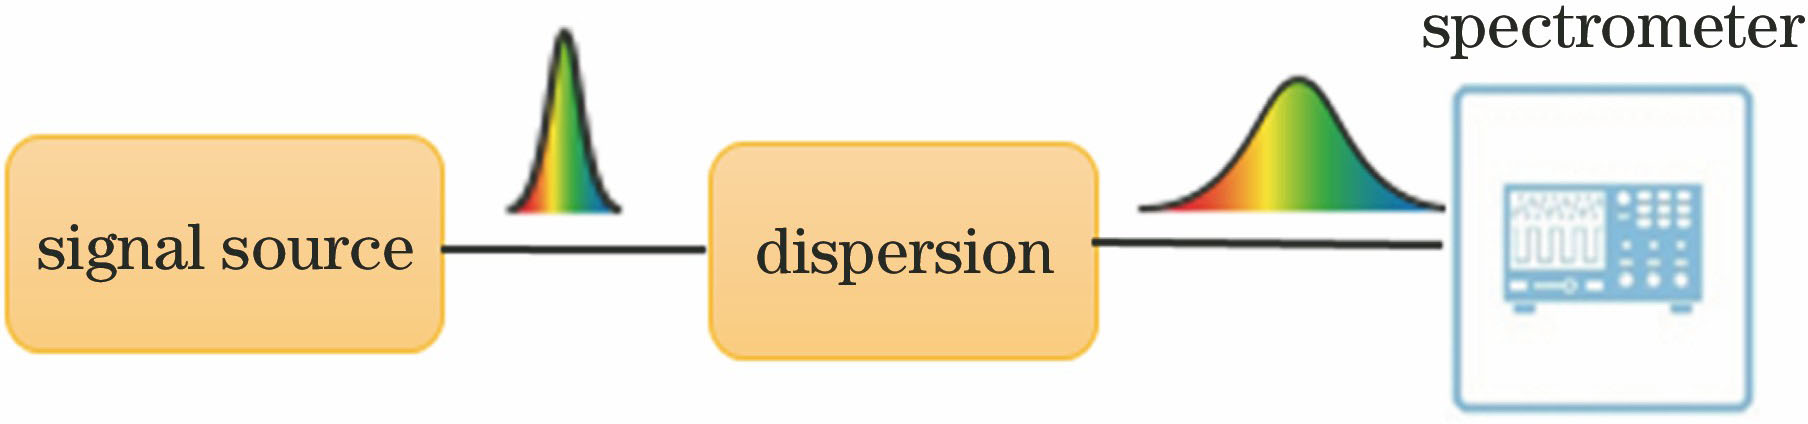 Fourier transform process based on dispersive pulse broadening